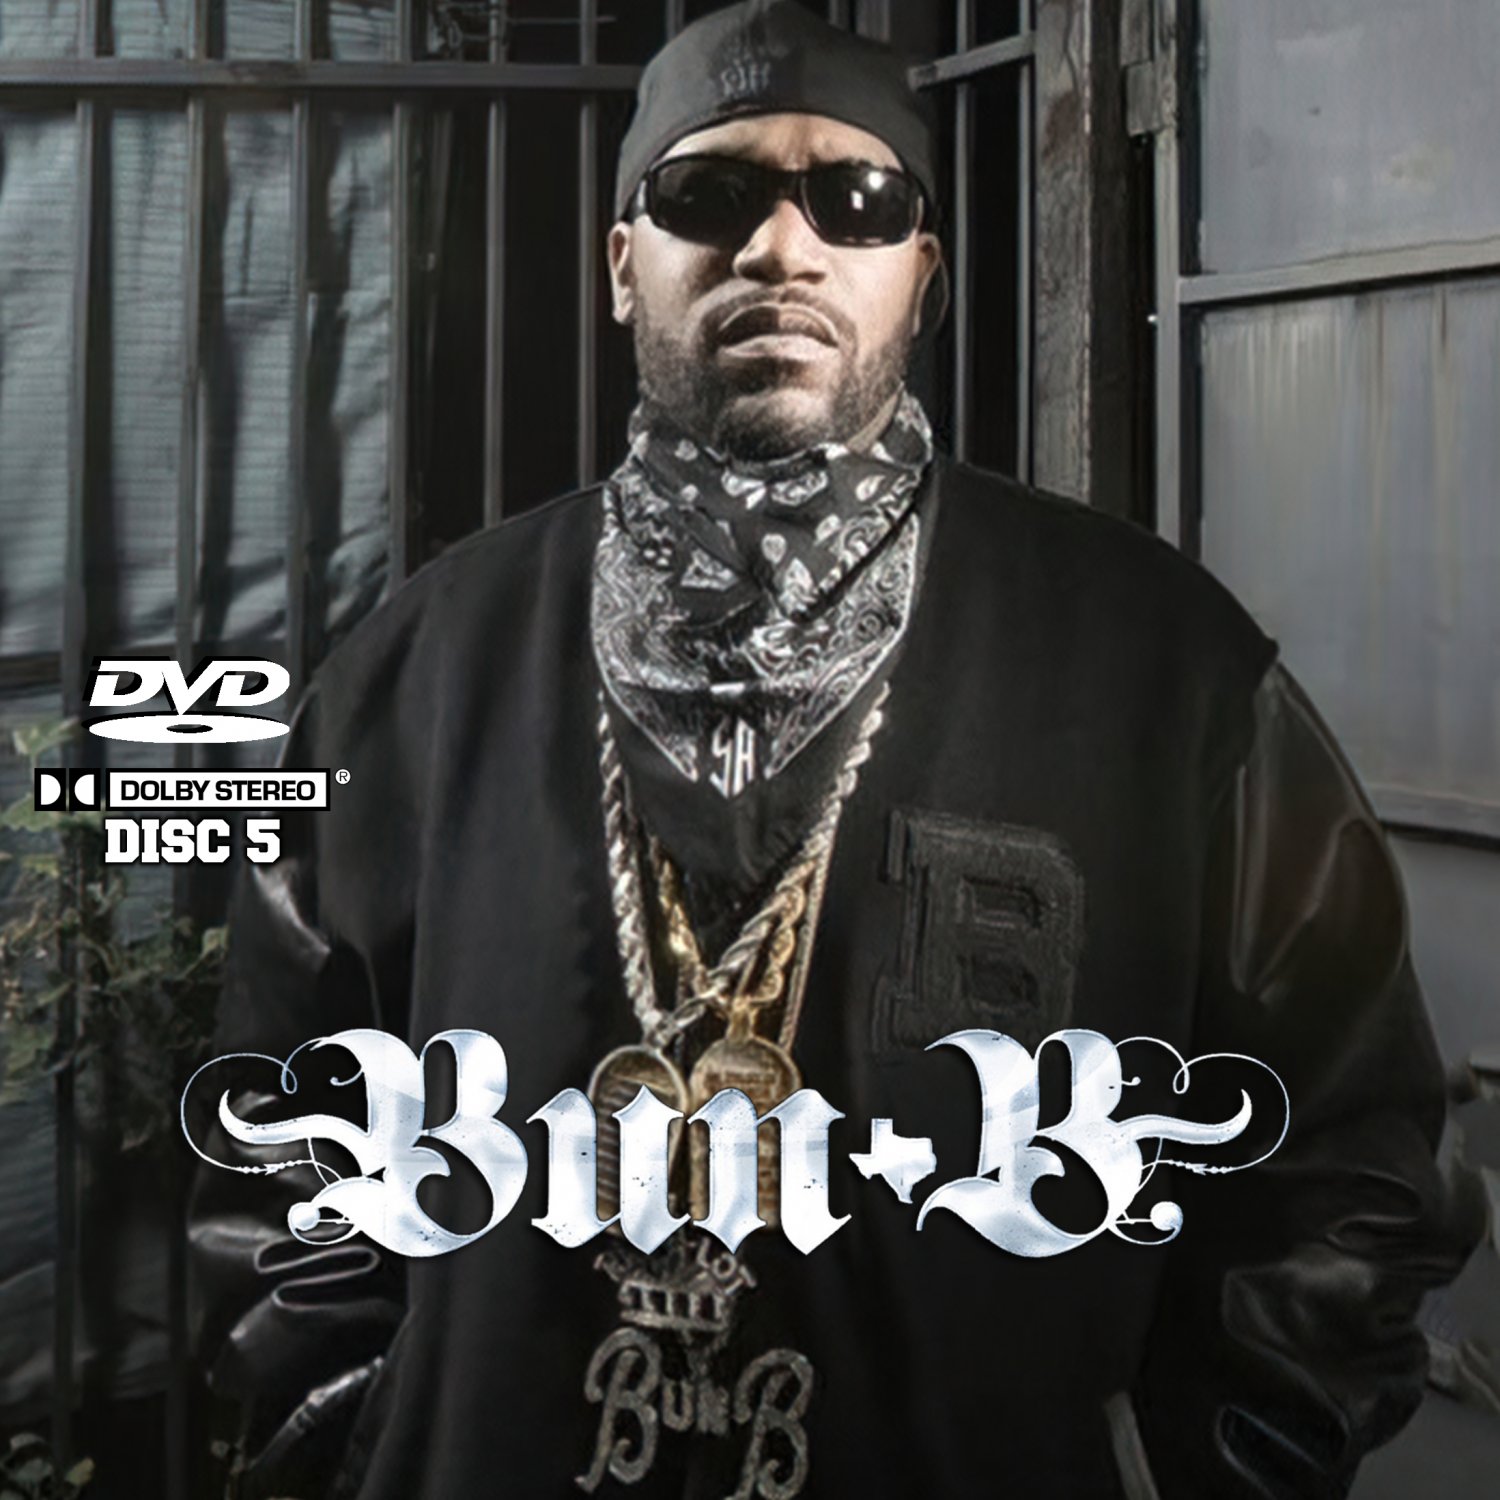 Bun B Music Videos Collection (UGK) (5 DVD's) 108 Music Videos